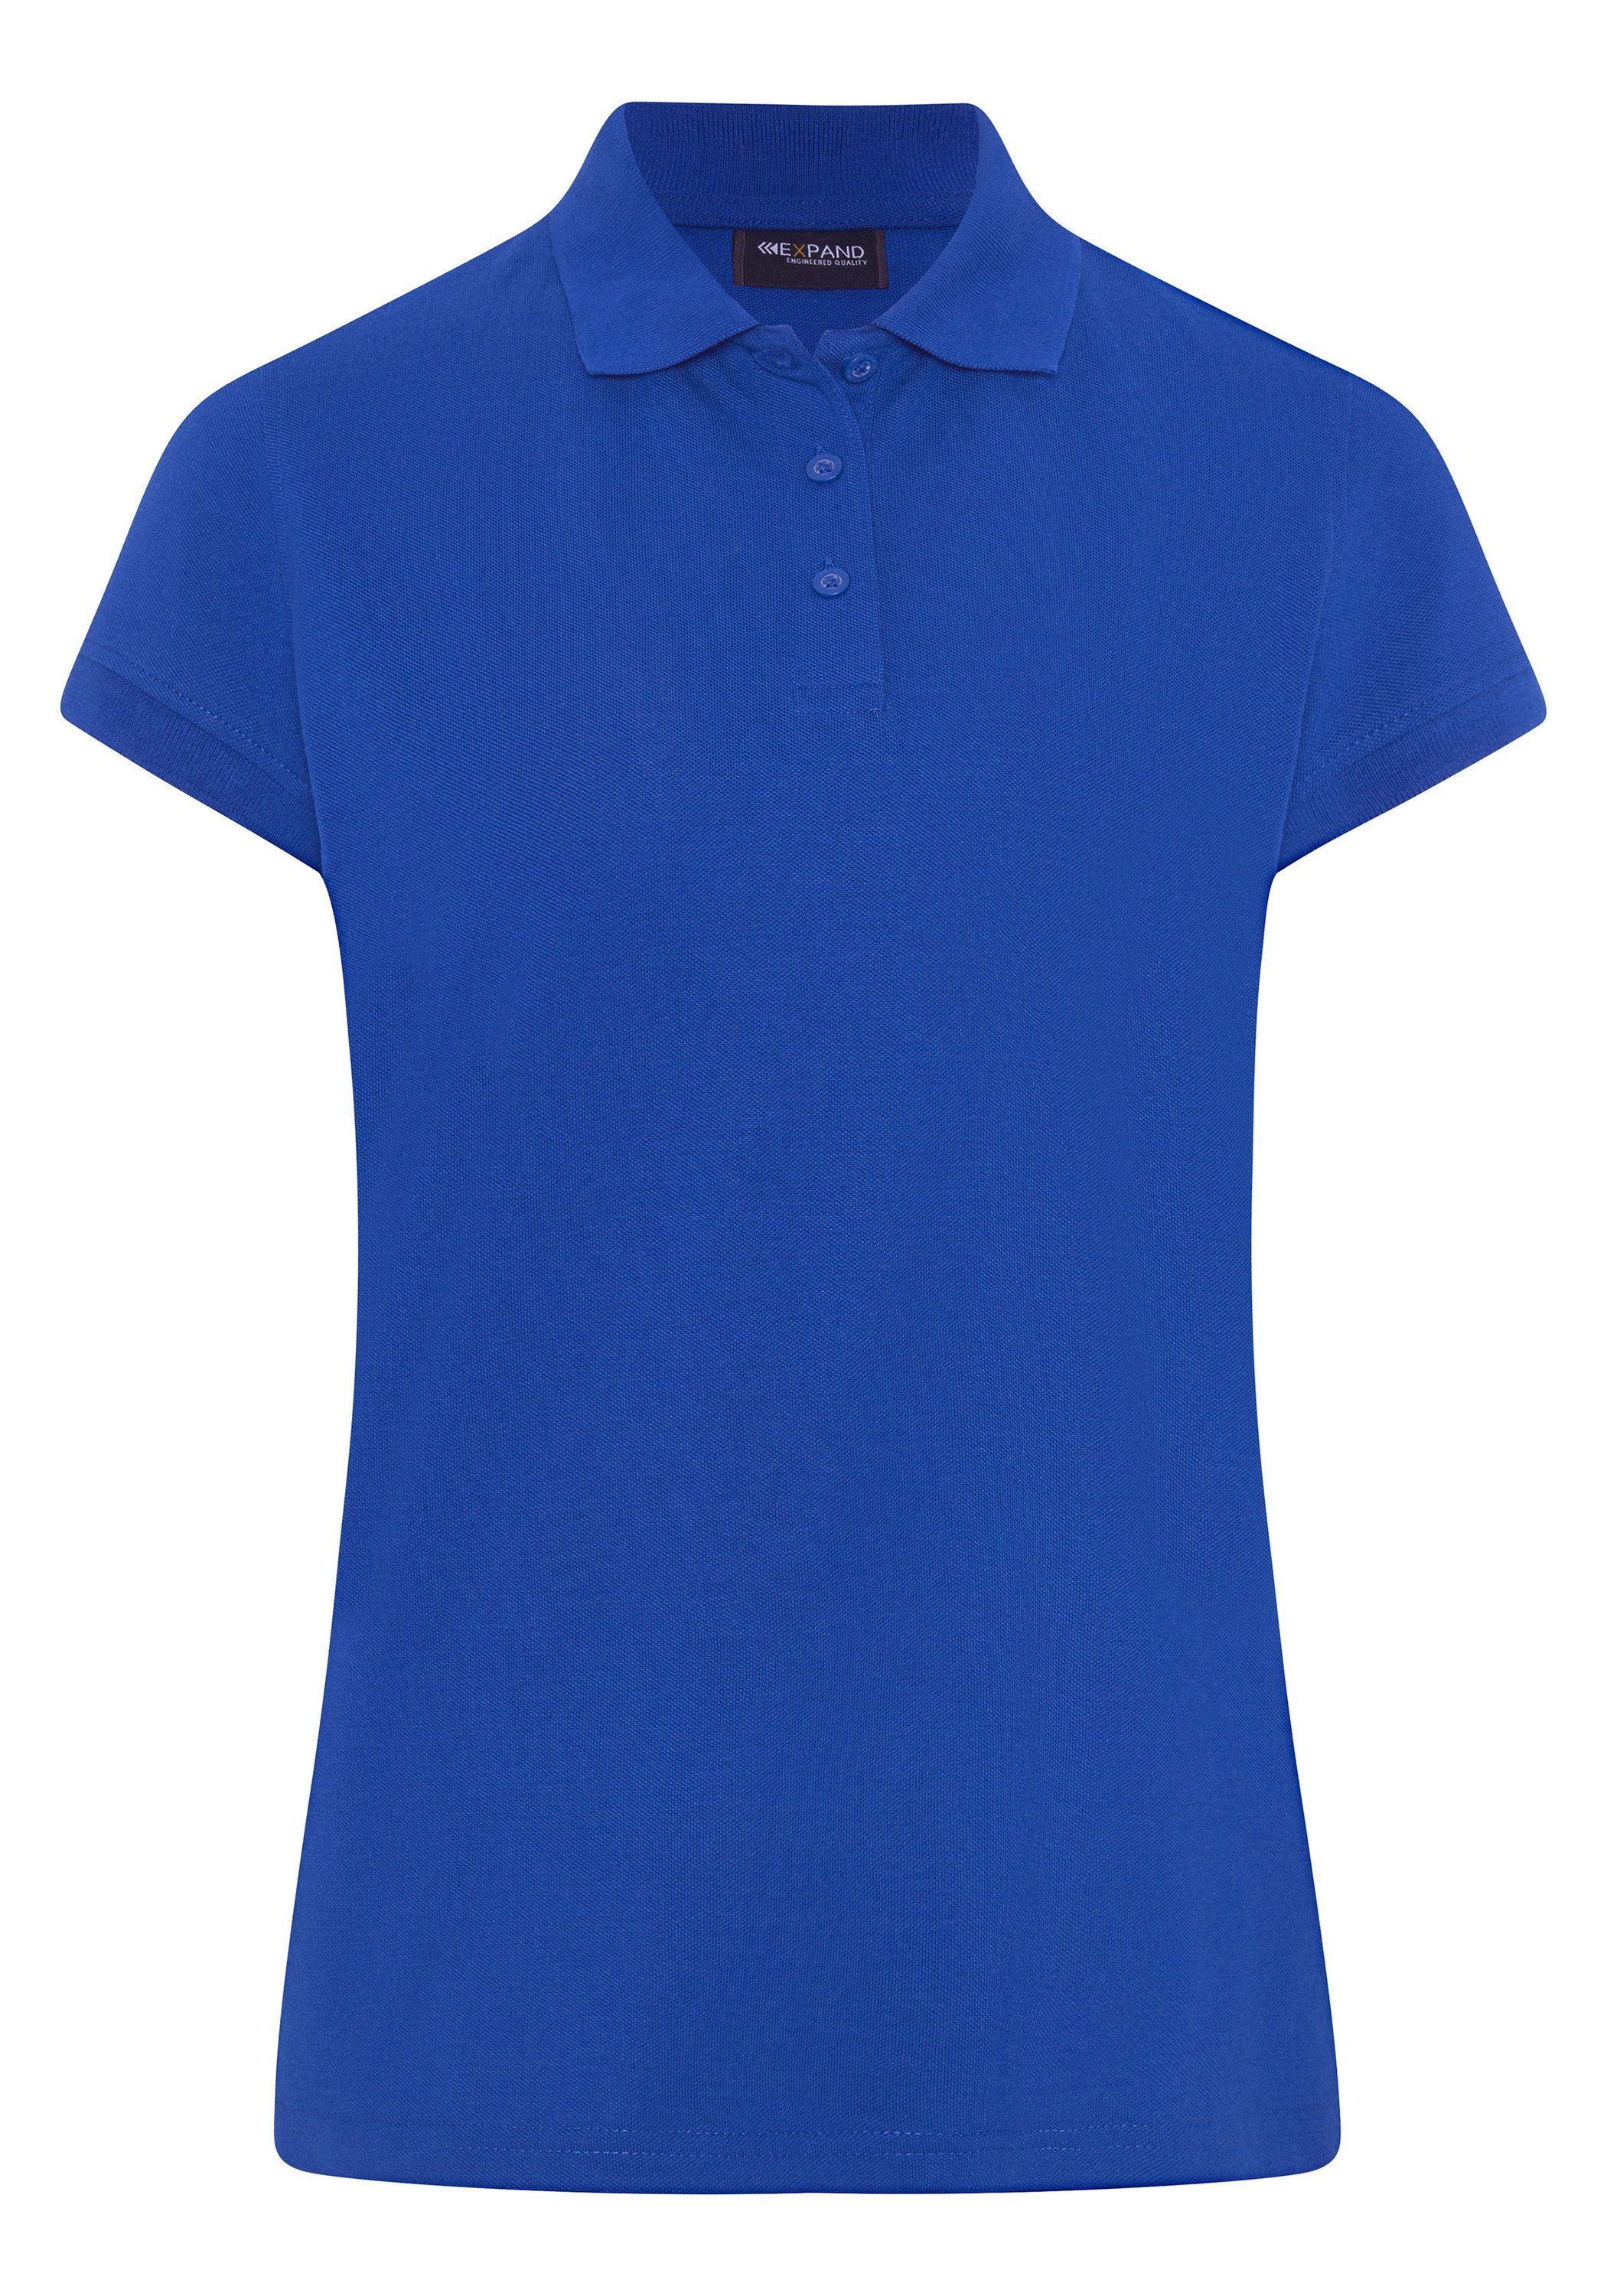 Expand Poloshirt aus strapazierfähigem Material ultramarine blau